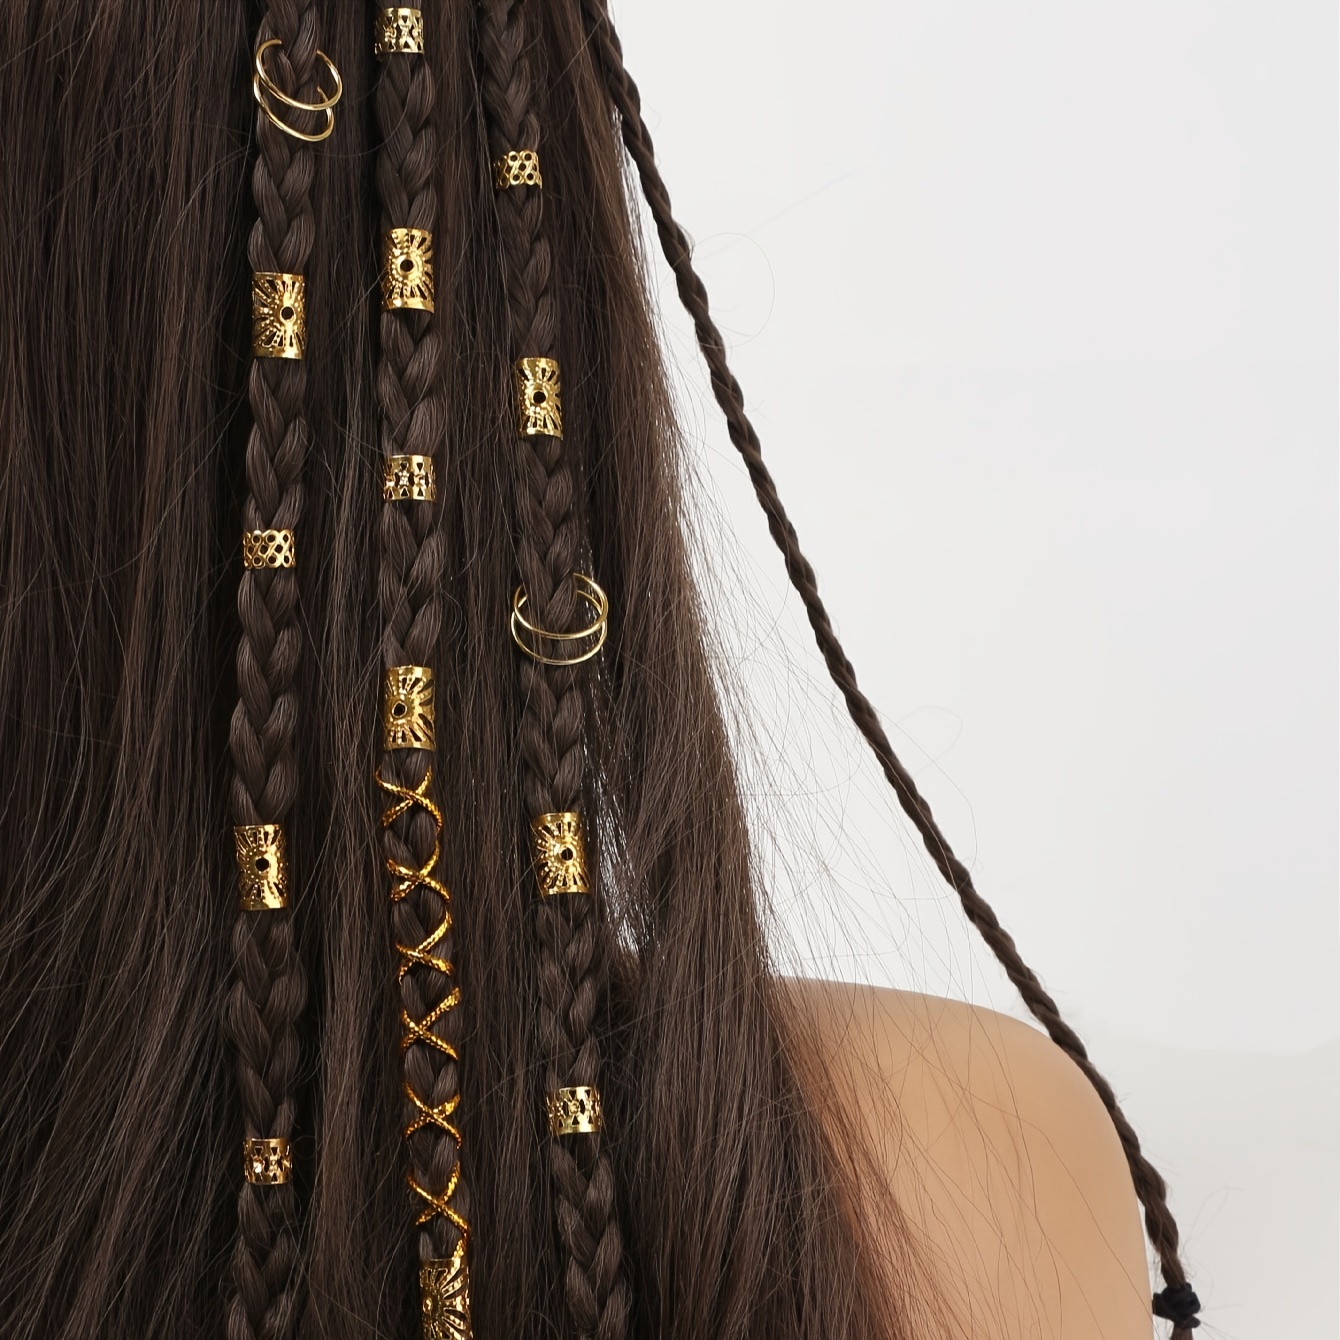 238PCS Hair Jewelry Braid Rings Cuff Decor Pendants Dreadlocks Beads  Accessories